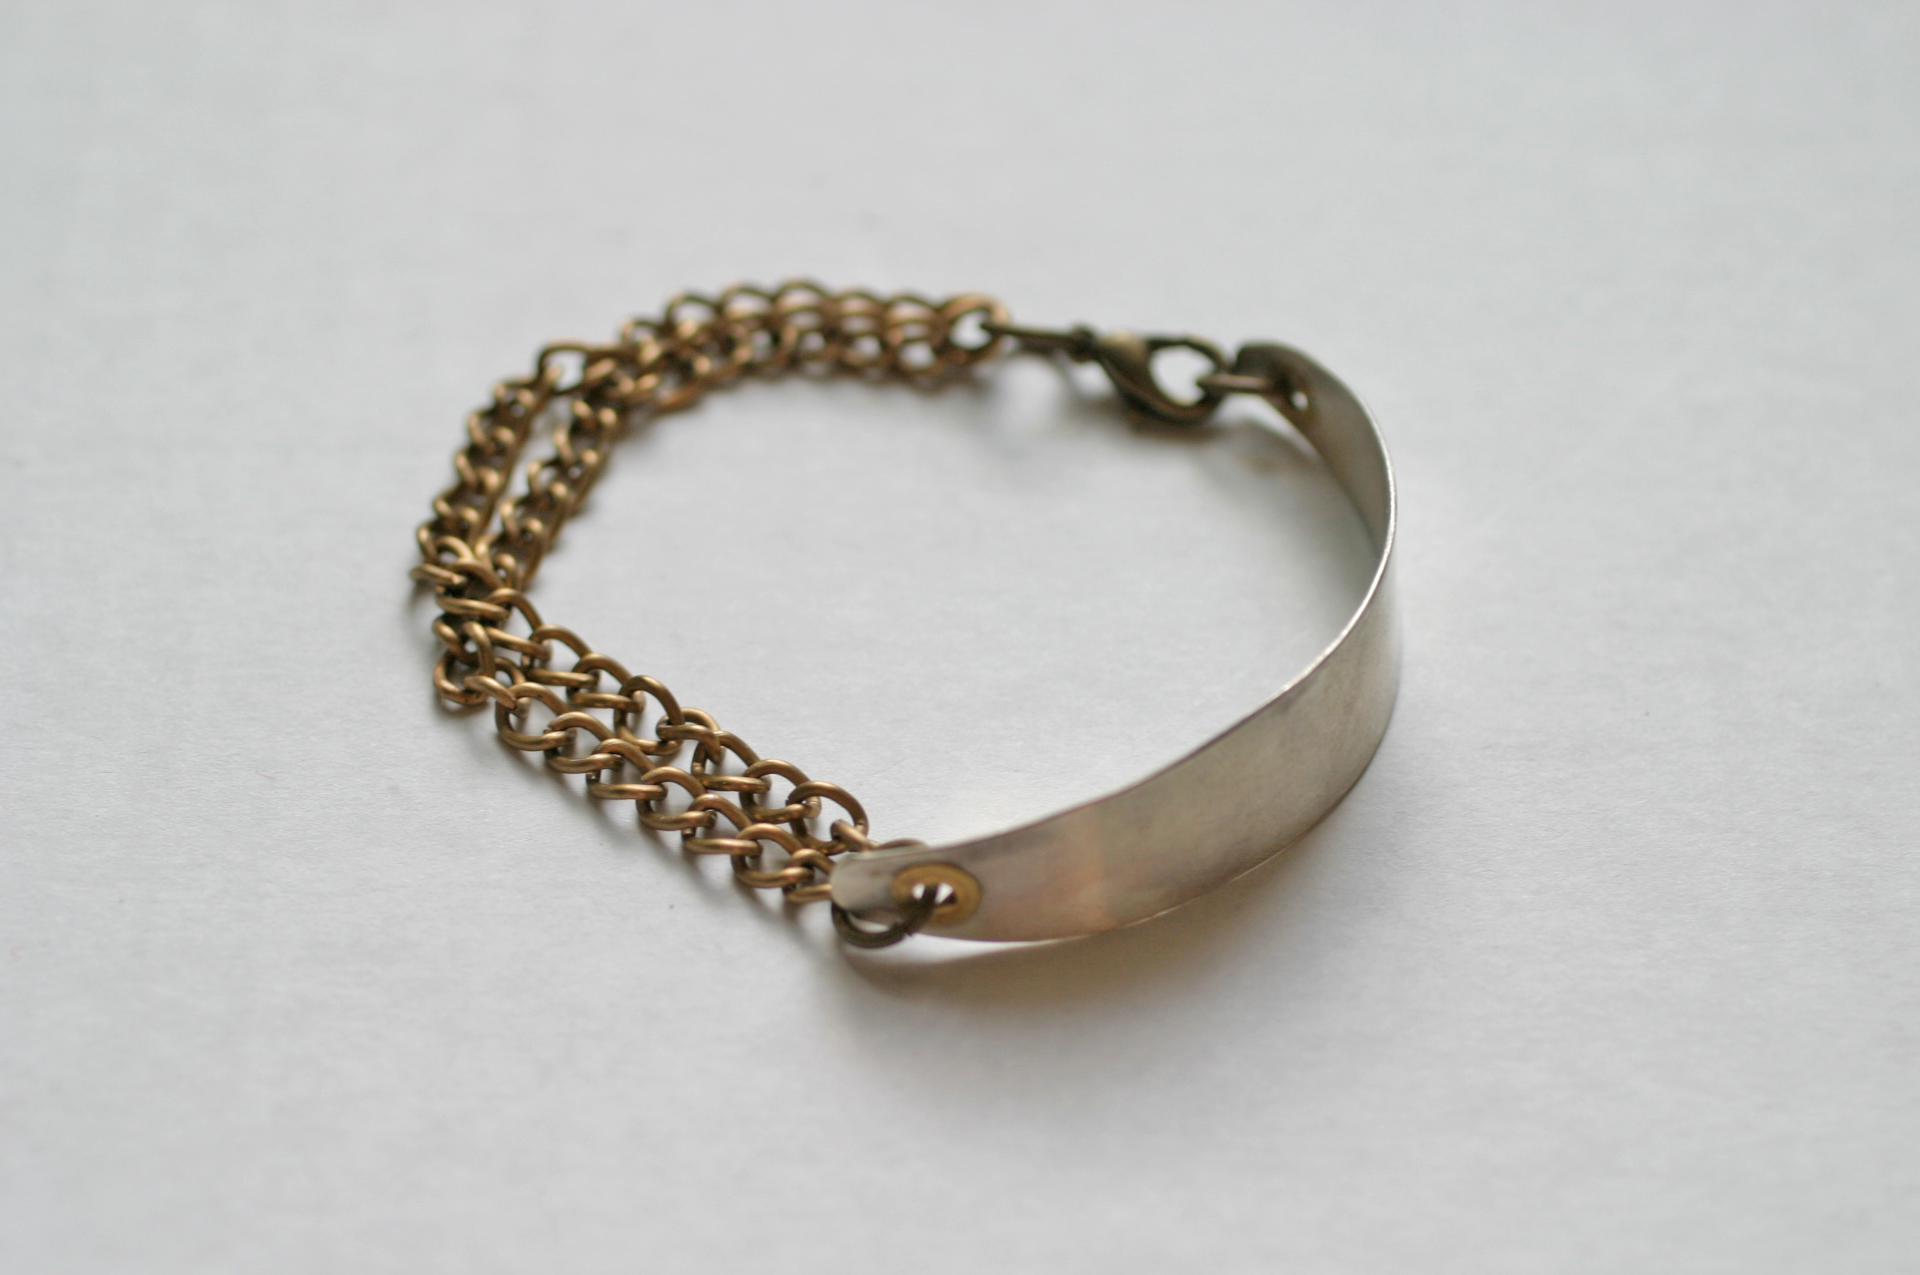 Elizabeth Baird Architecture-Jewelery-silver and brass chain bracelet.jpg